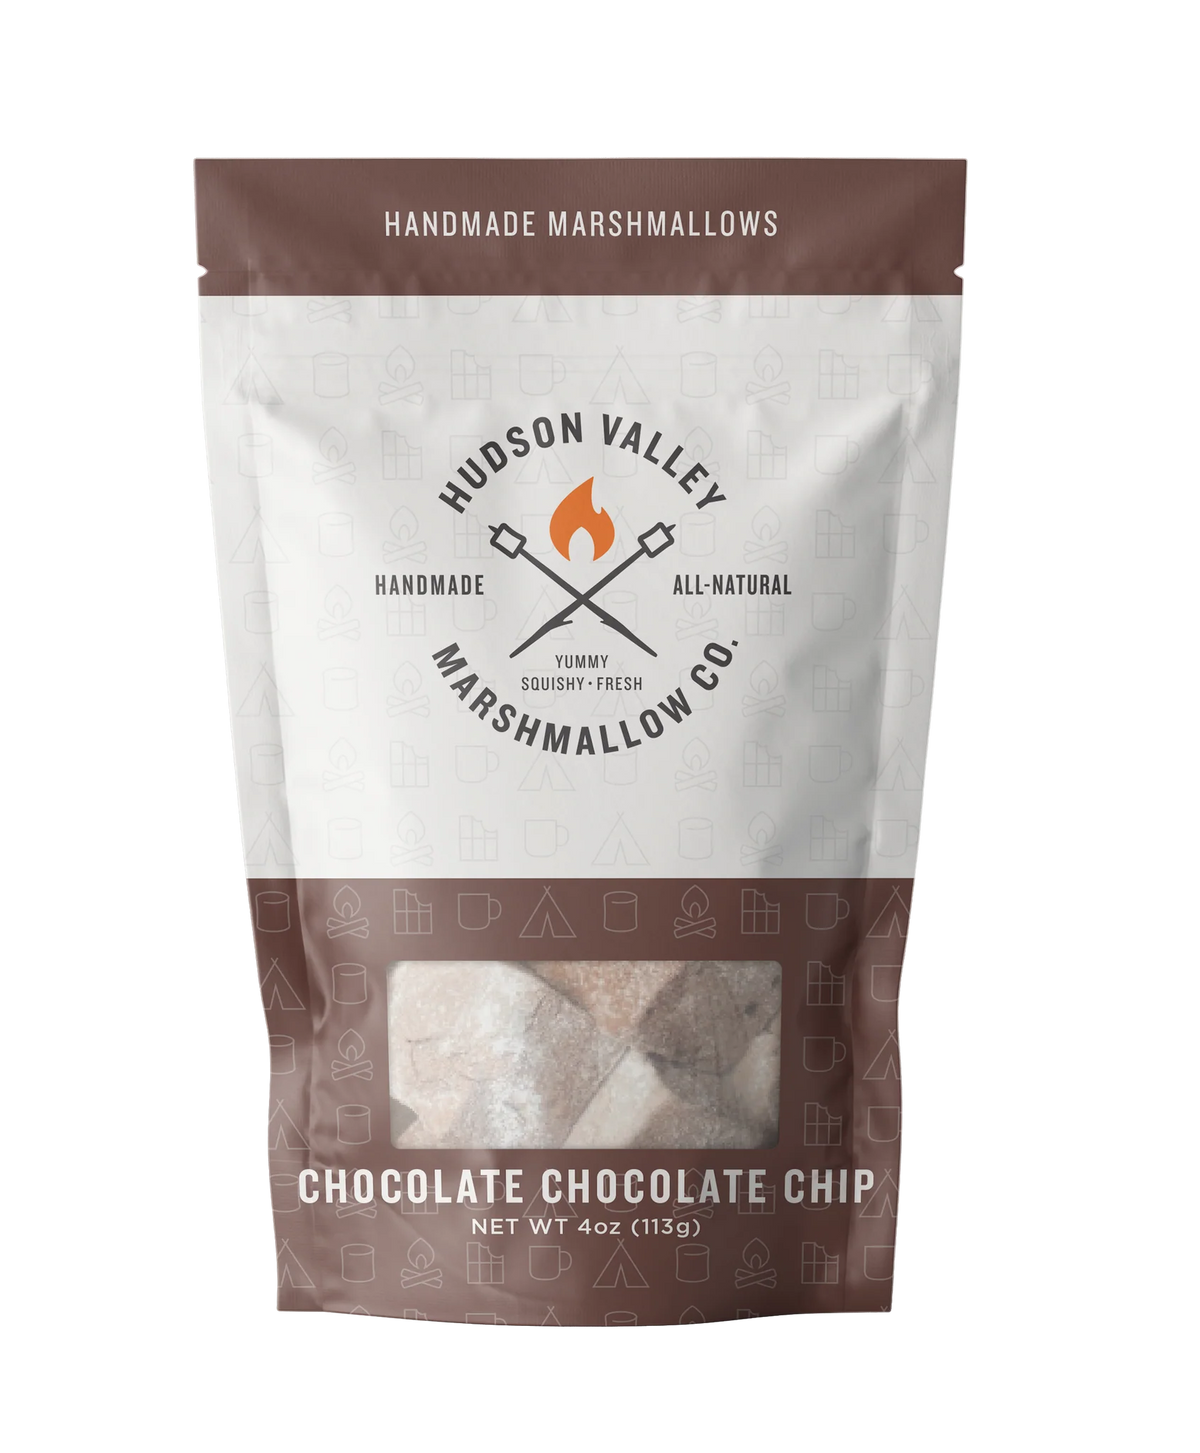 Gourmet Chocolate Chip Handmade Marshmallows